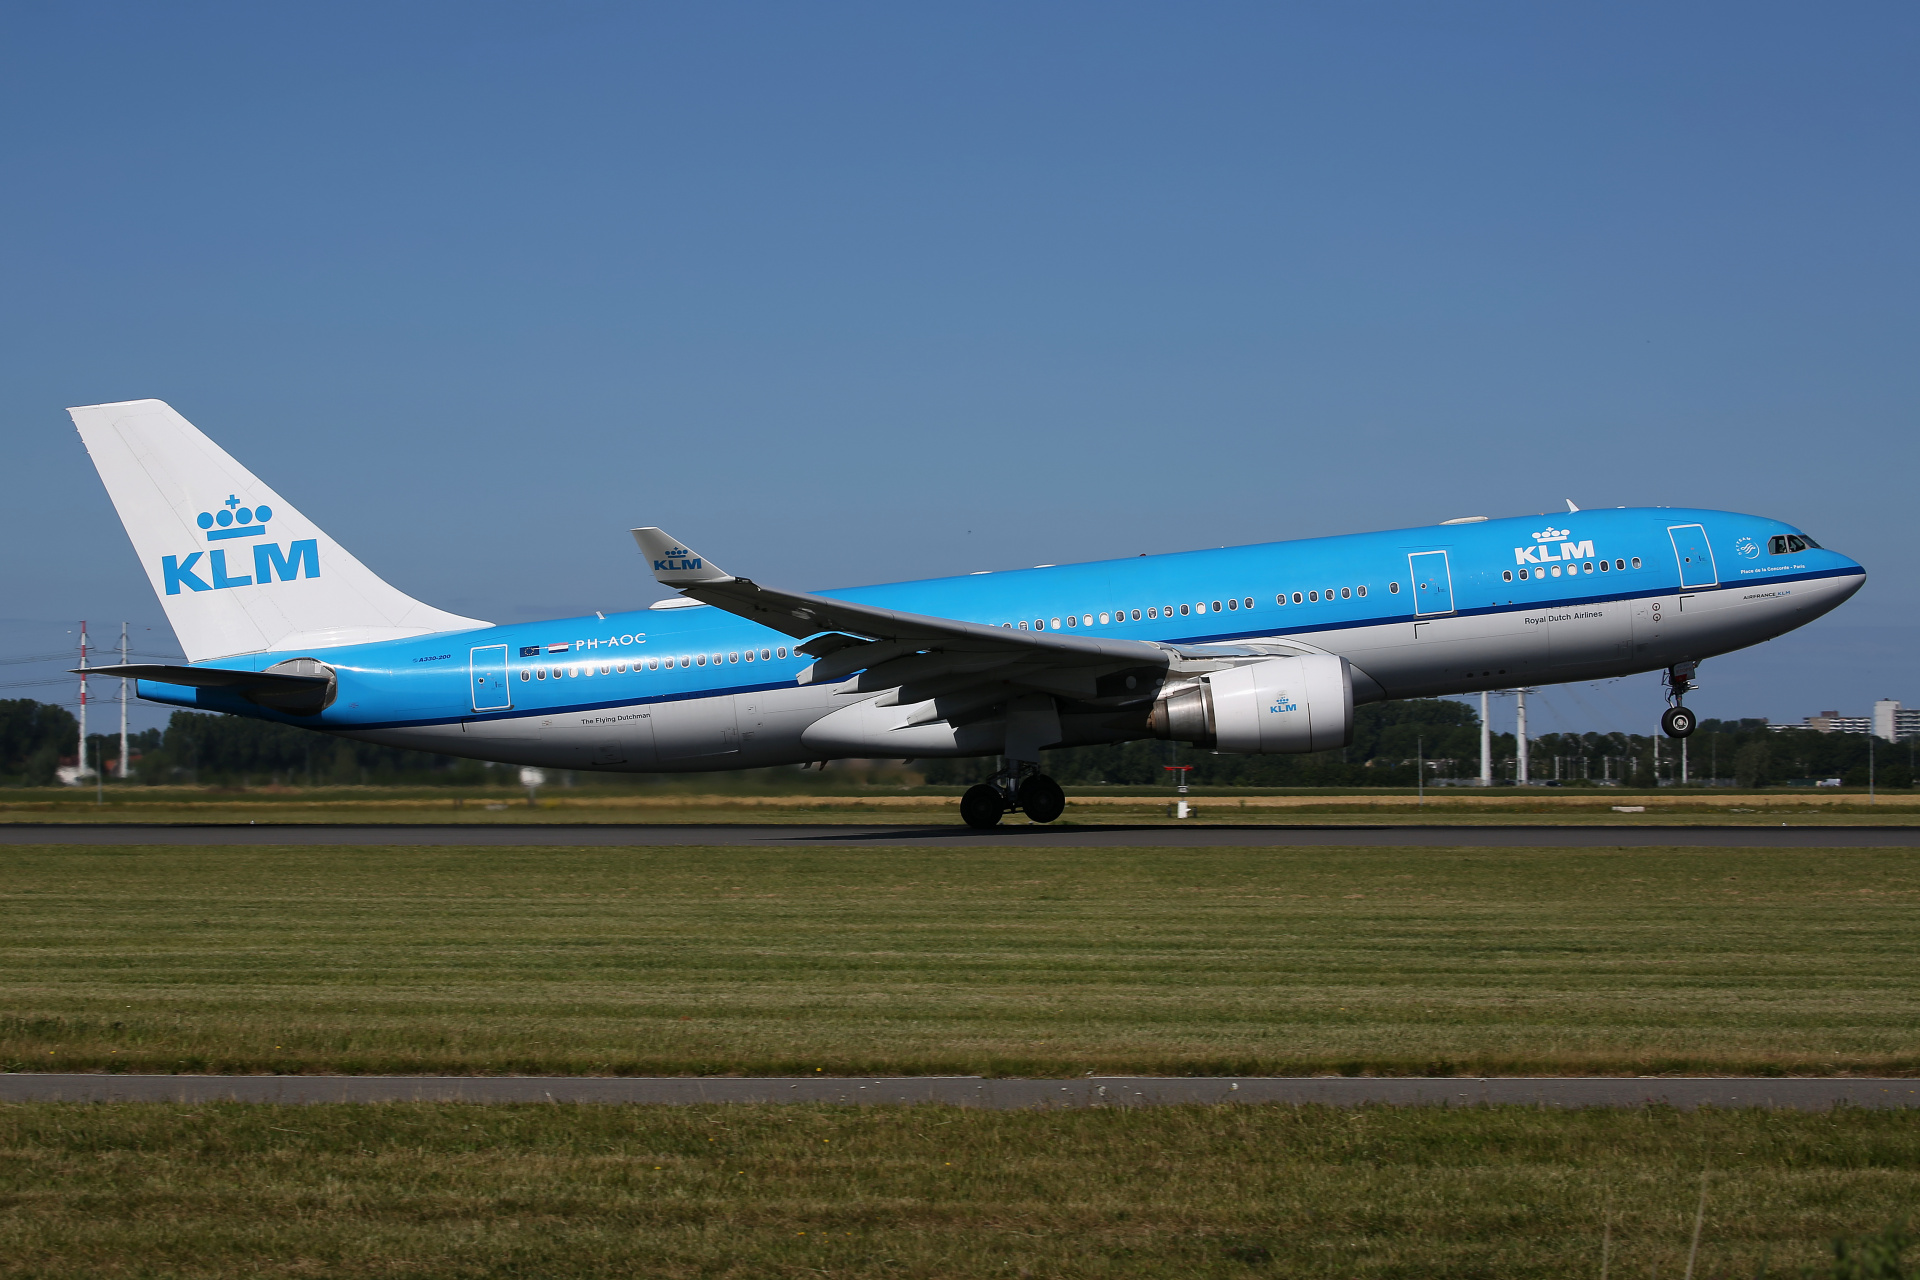 PH-AOC (Aircraft » Schiphol Spotting » Airbus A330-200 » KLM Royal Dutch Airlines)